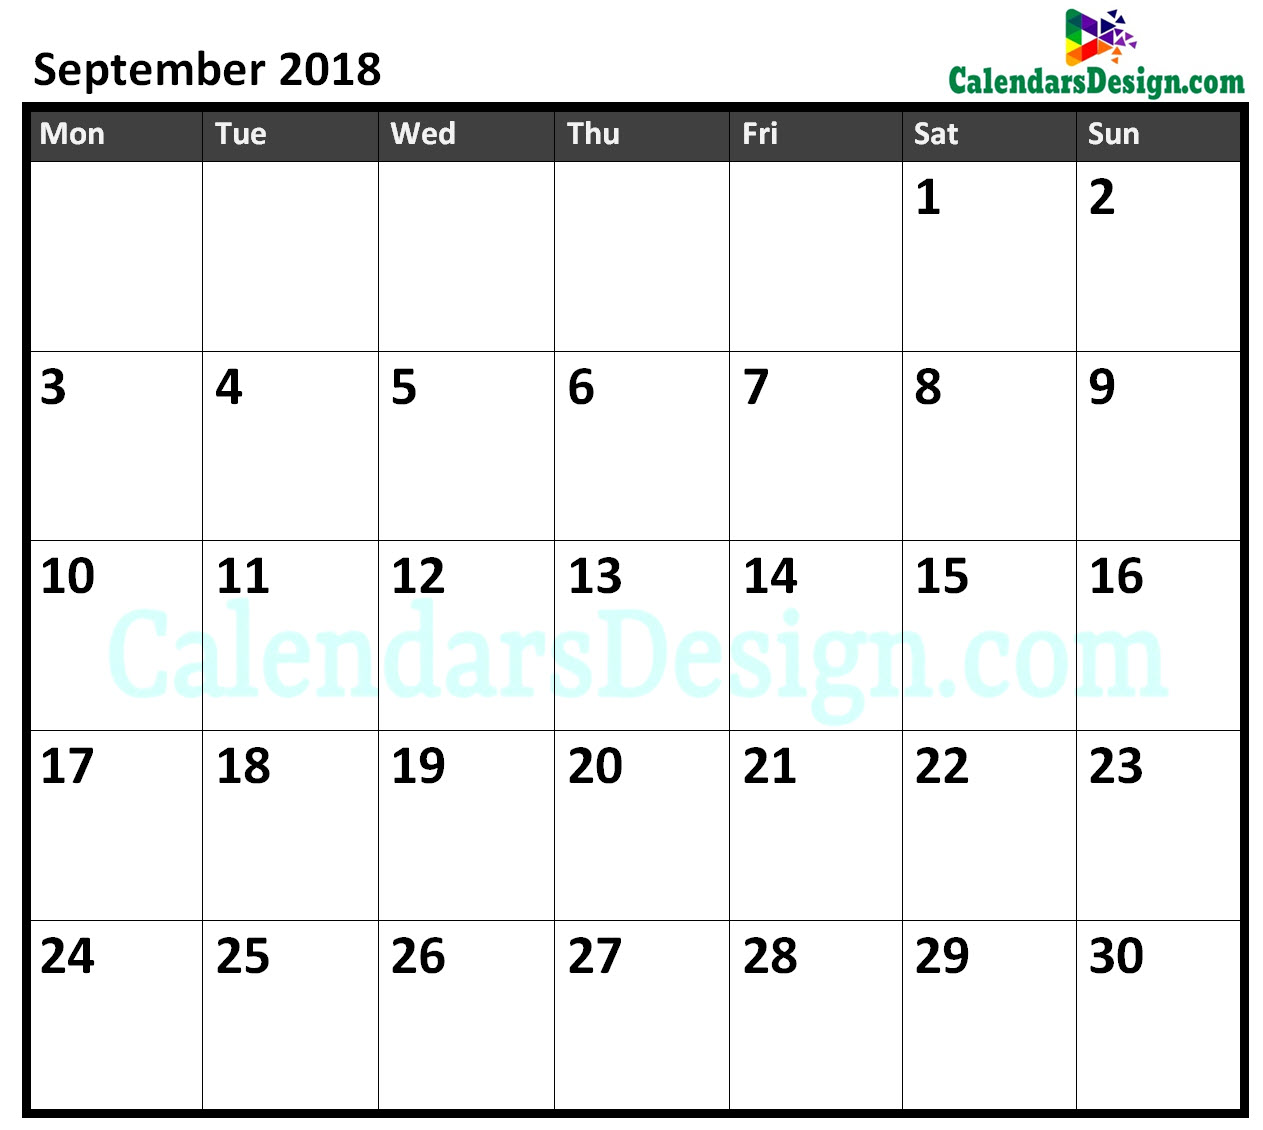 September 2018 Calendar Excel